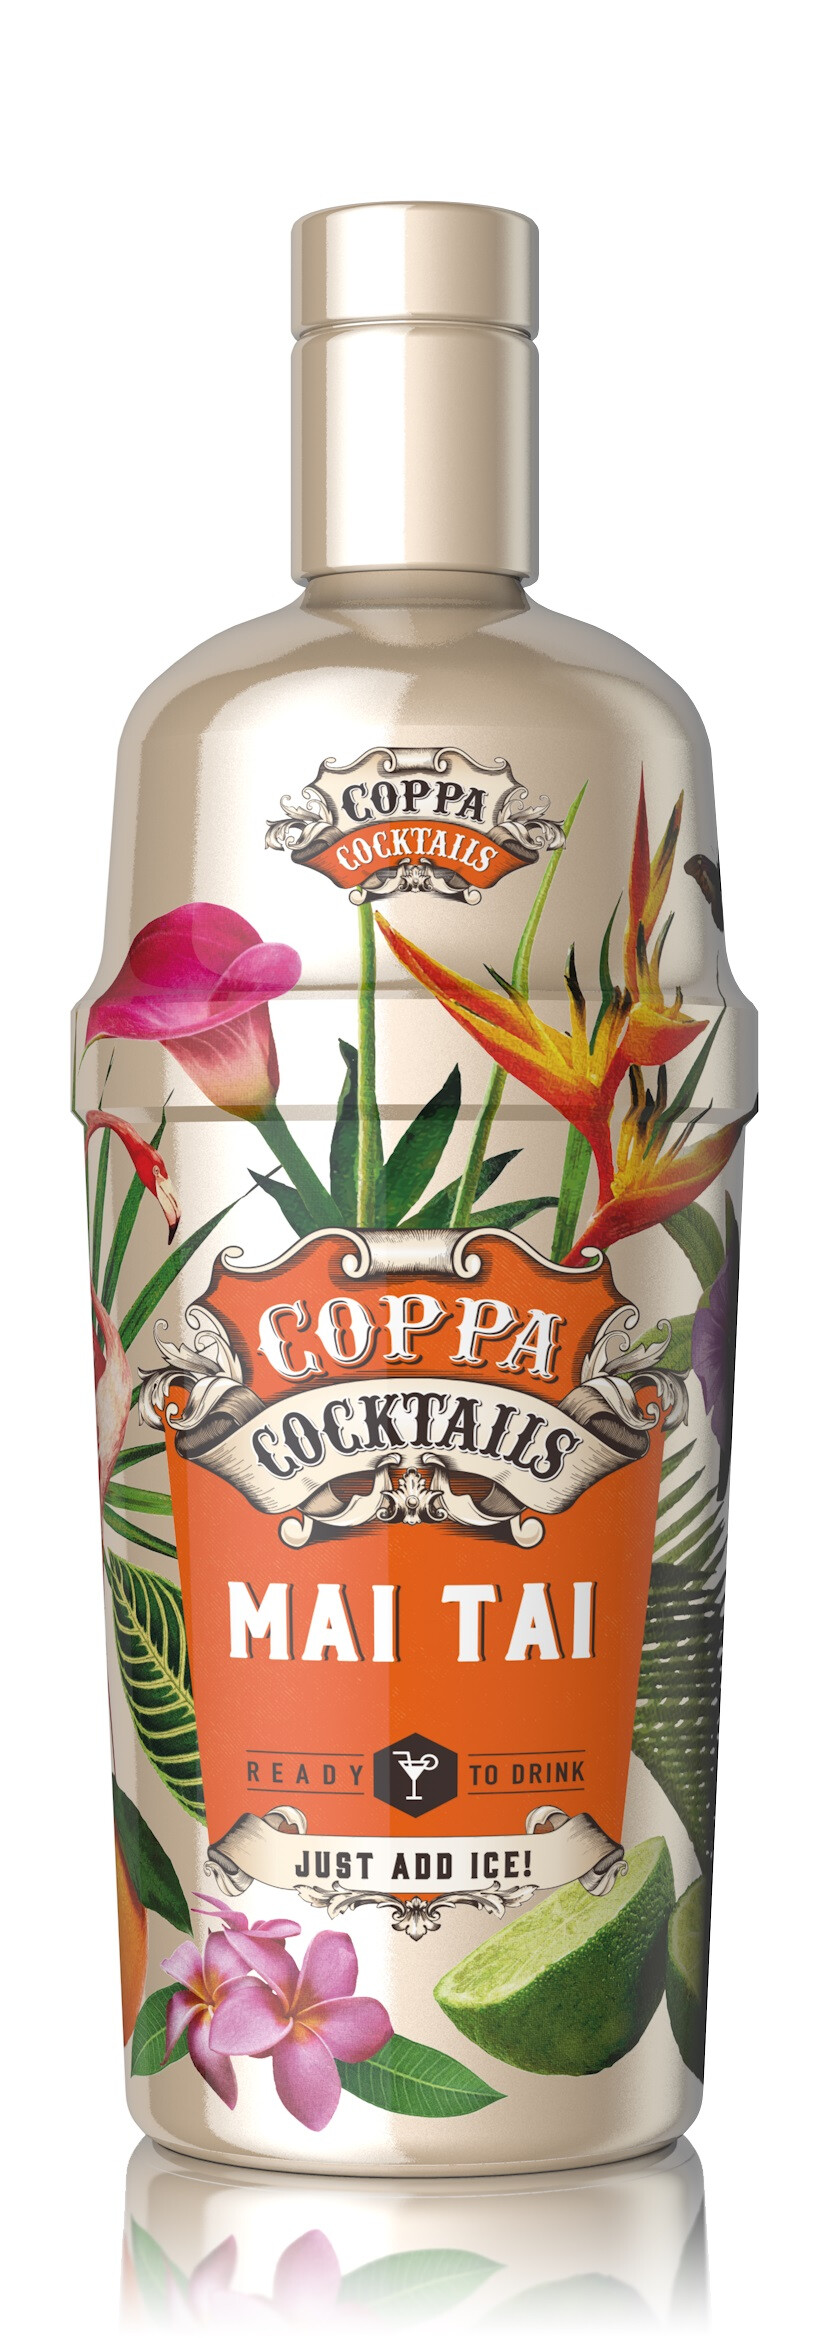 Coppa Cocktails Mai Thai 70cl 10%